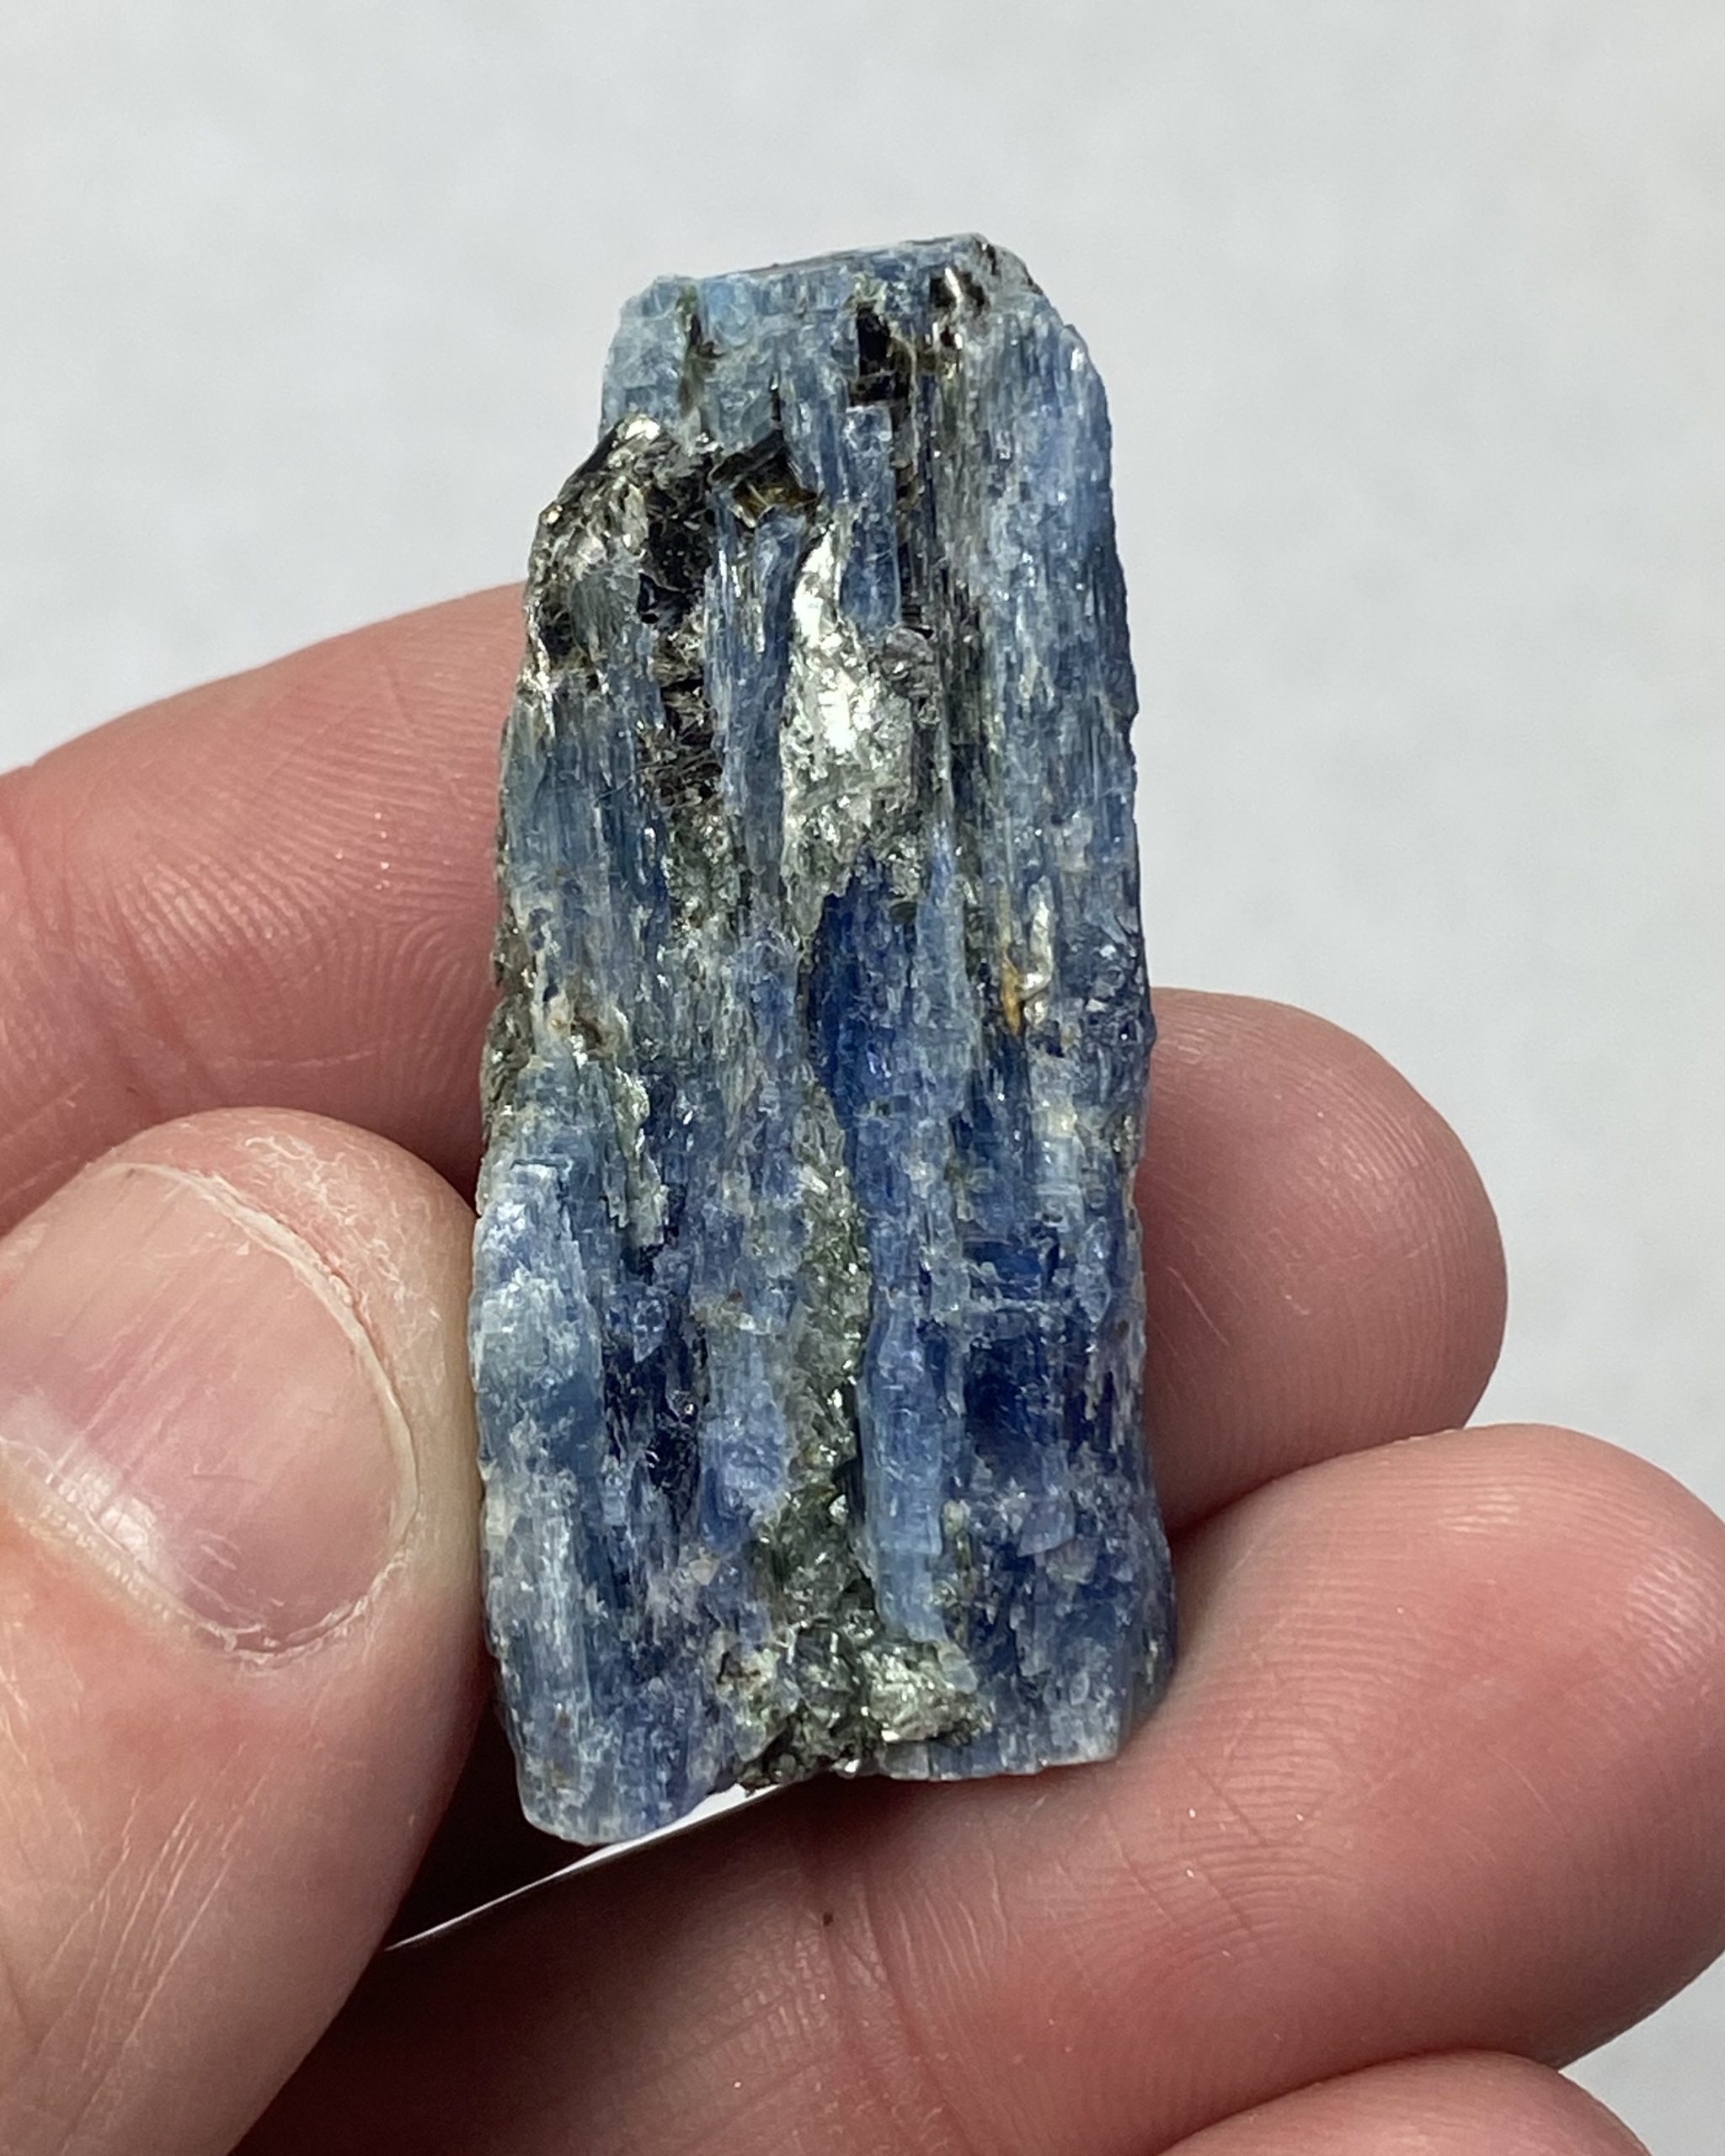 Kyanite - dark blue with biotite